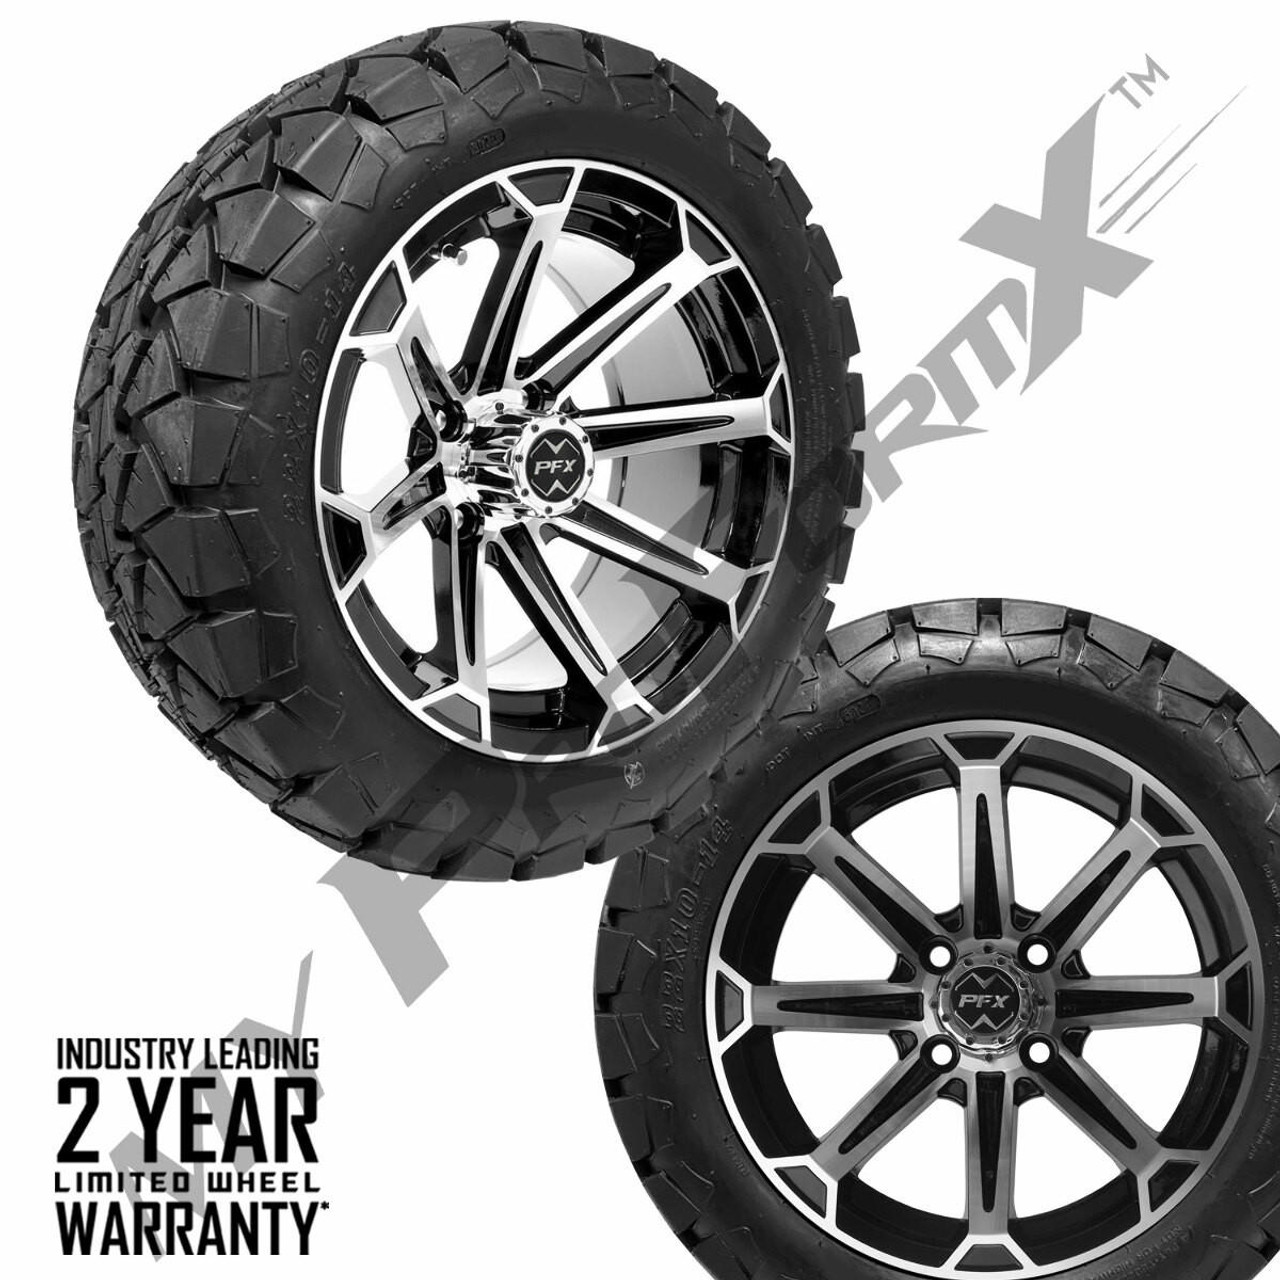 ProFormX 14" VORTEX Machined/Black Wheels on 22x10x14 Timberwolf A/T Tires (Set of 4) 